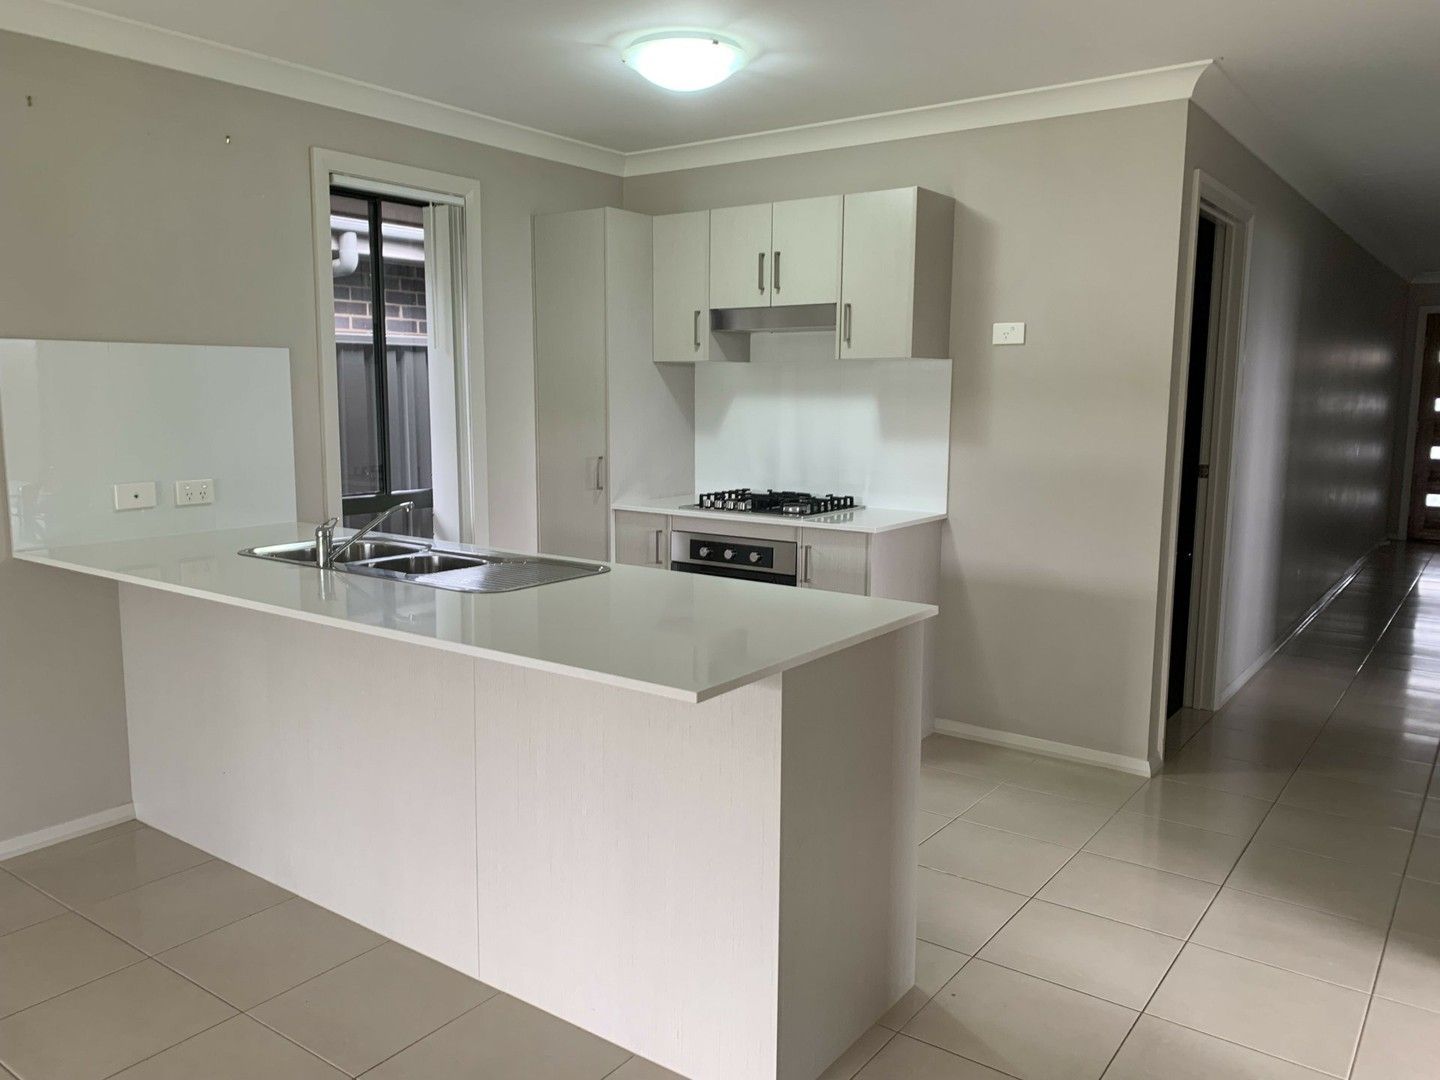 3 bedrooms House in 1/15 Lambkin Street SINGLETON NSW, 2330